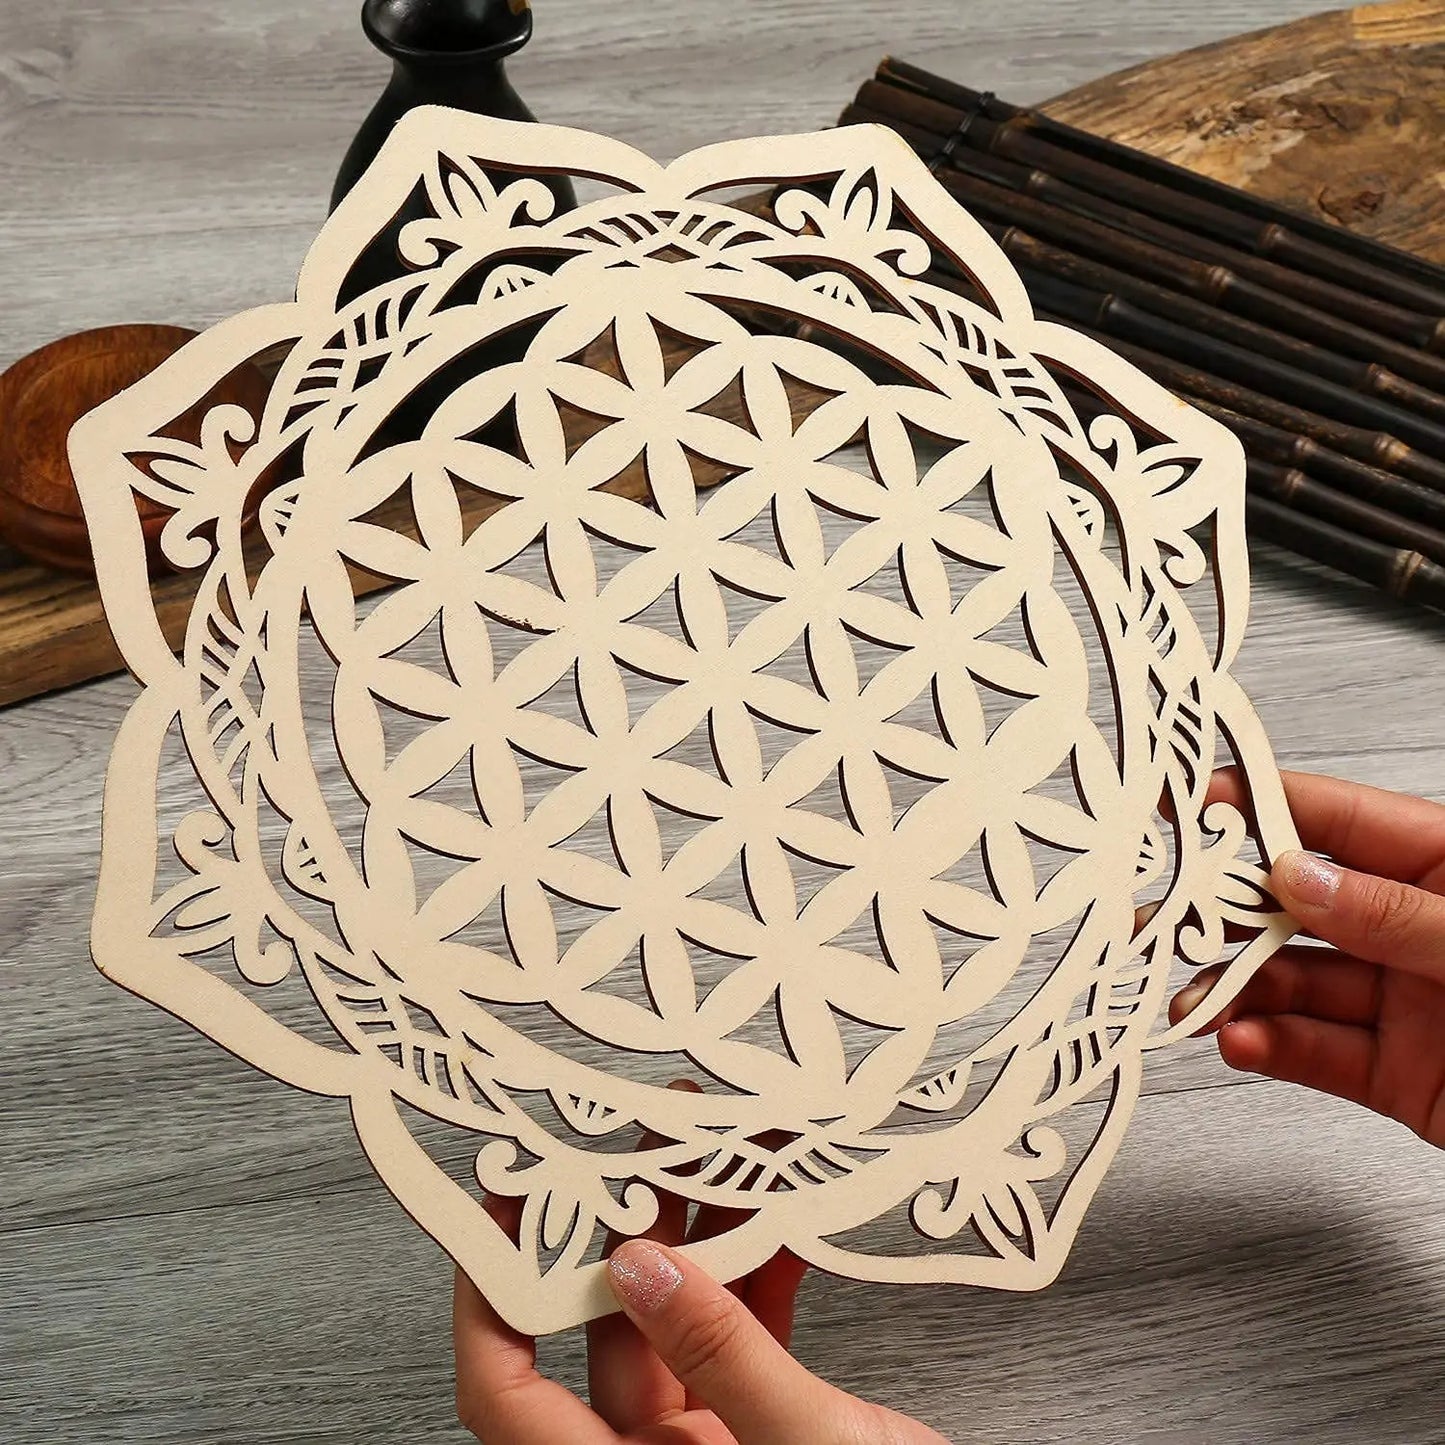 LARGE Ornate Wooden Crystal Grid Board | Sacred Geometry Energy Tool | FLOWER OF LIFE